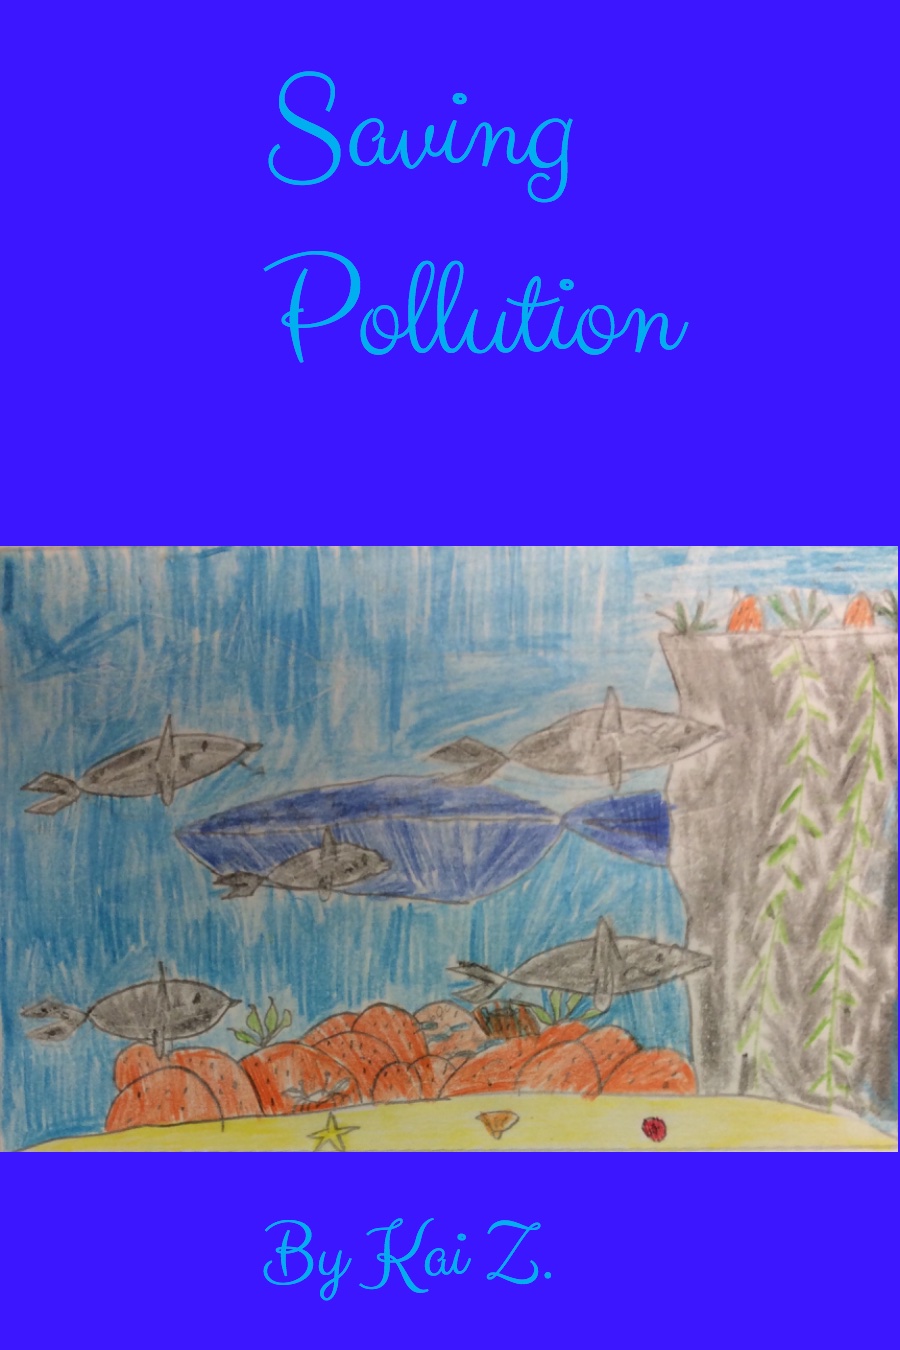 Saving Pollution by Kai Z